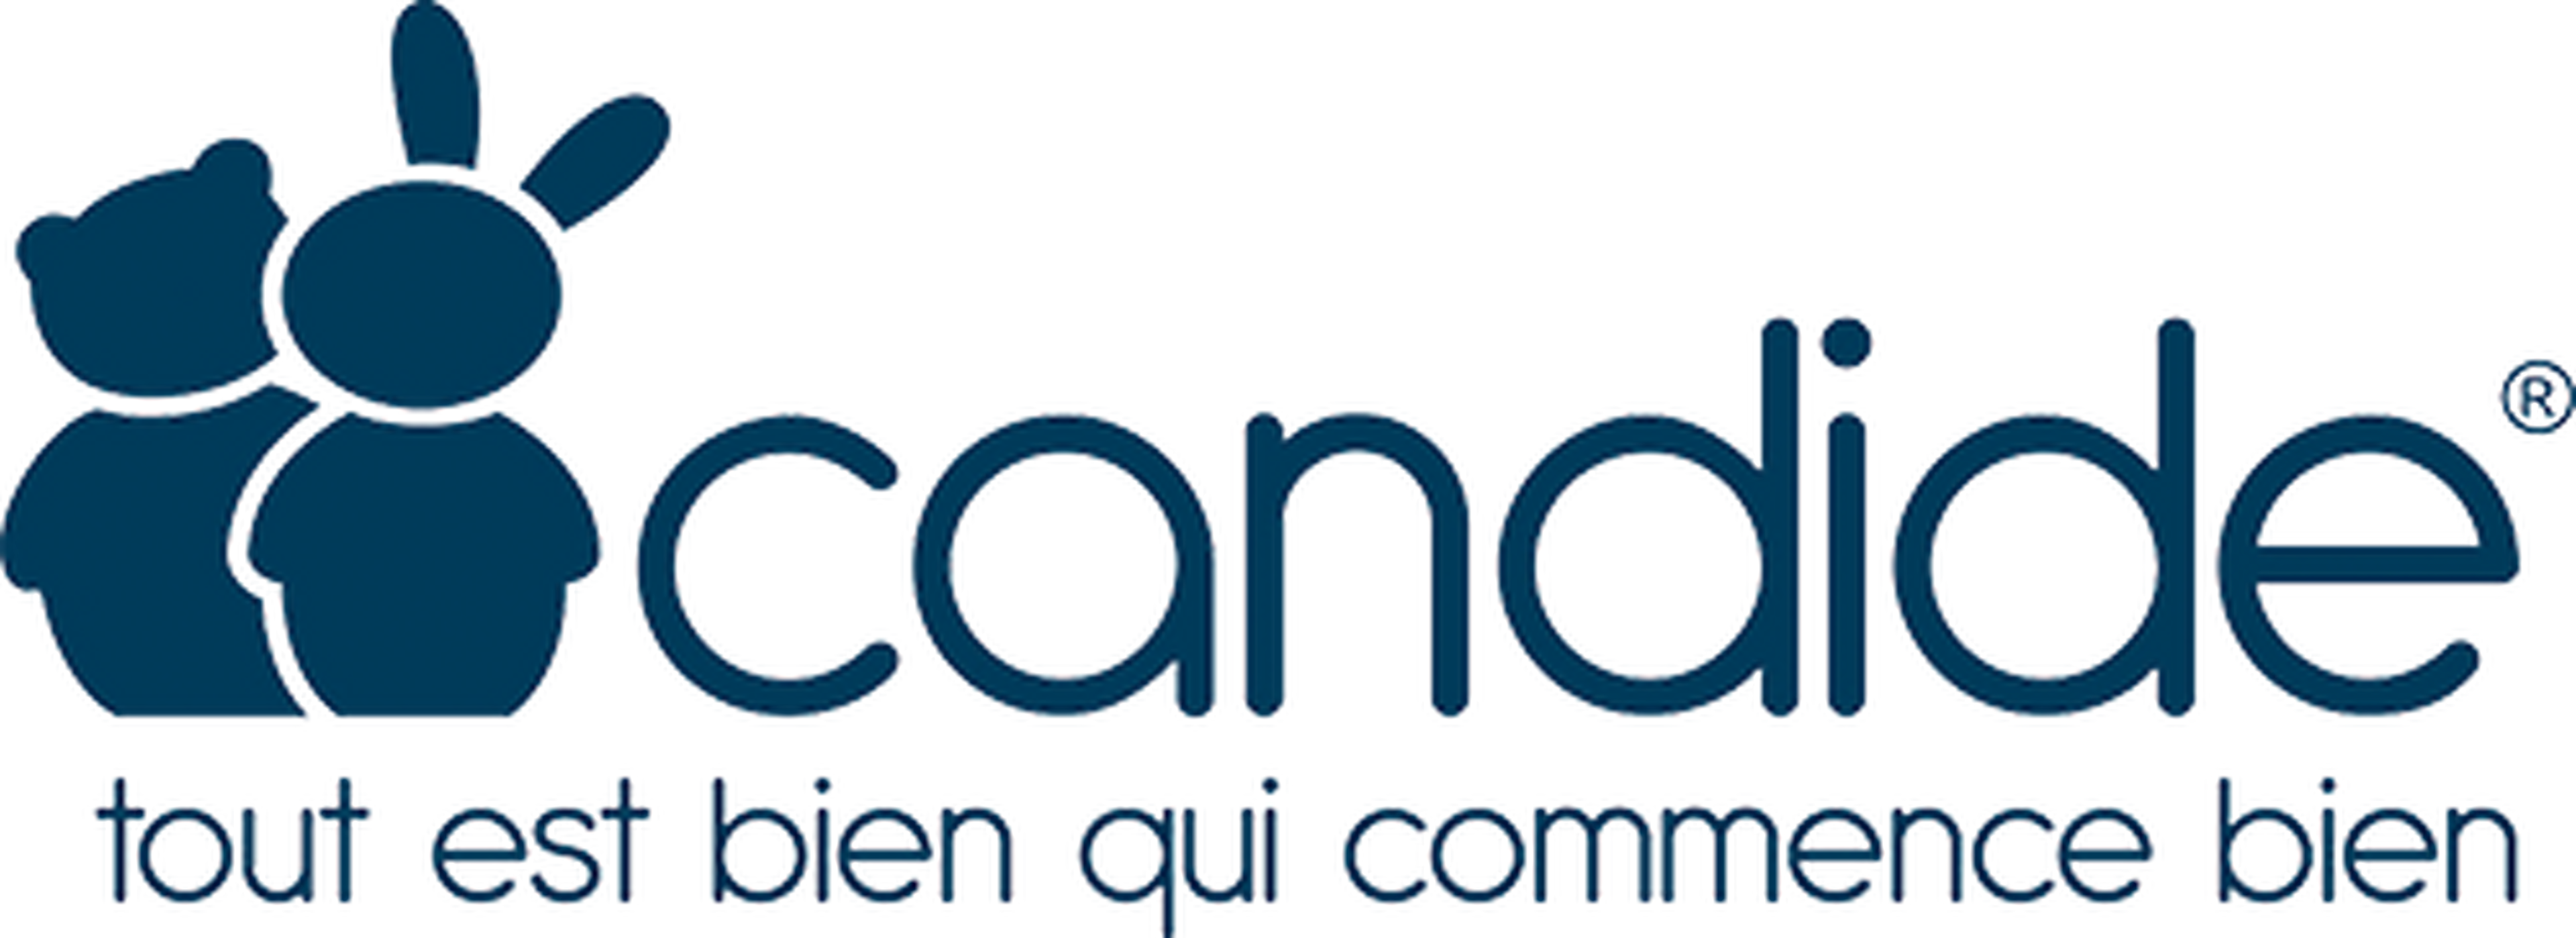 Candide logotype